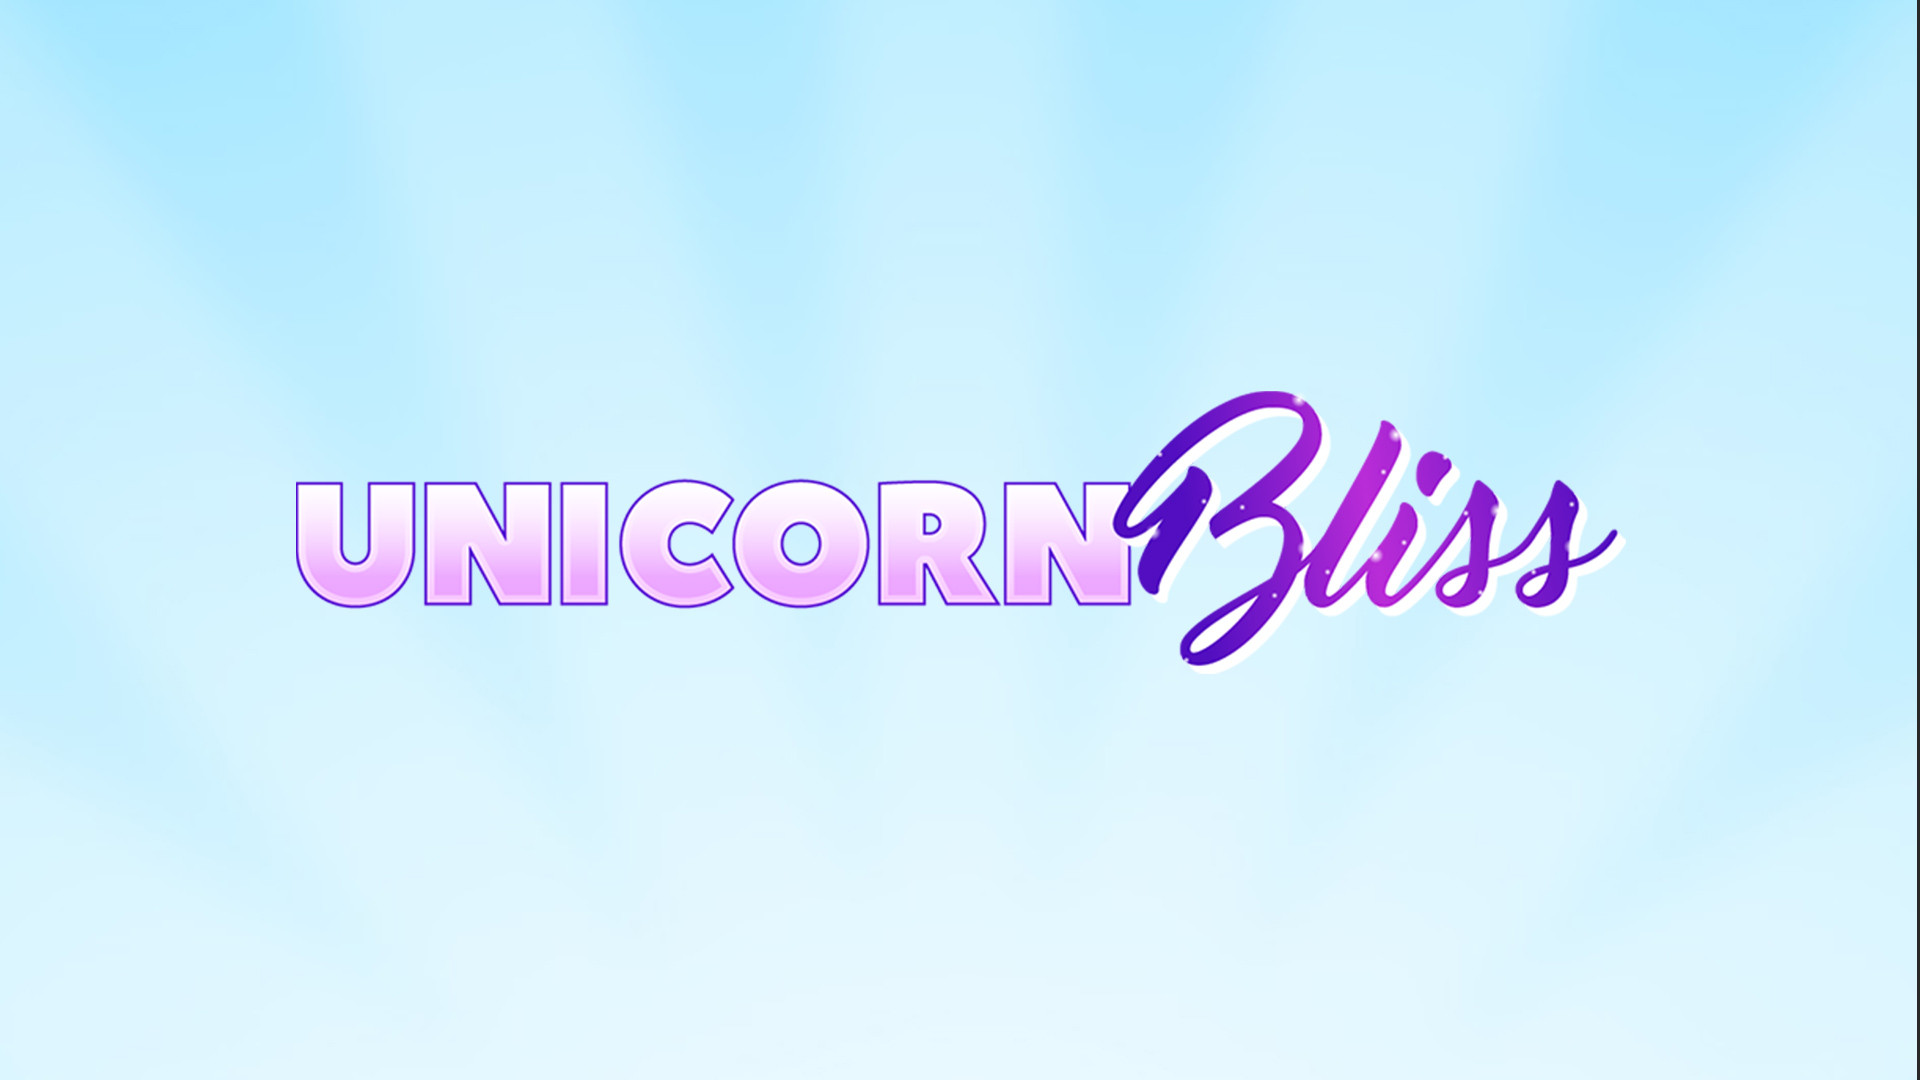 Unicorn Bliss